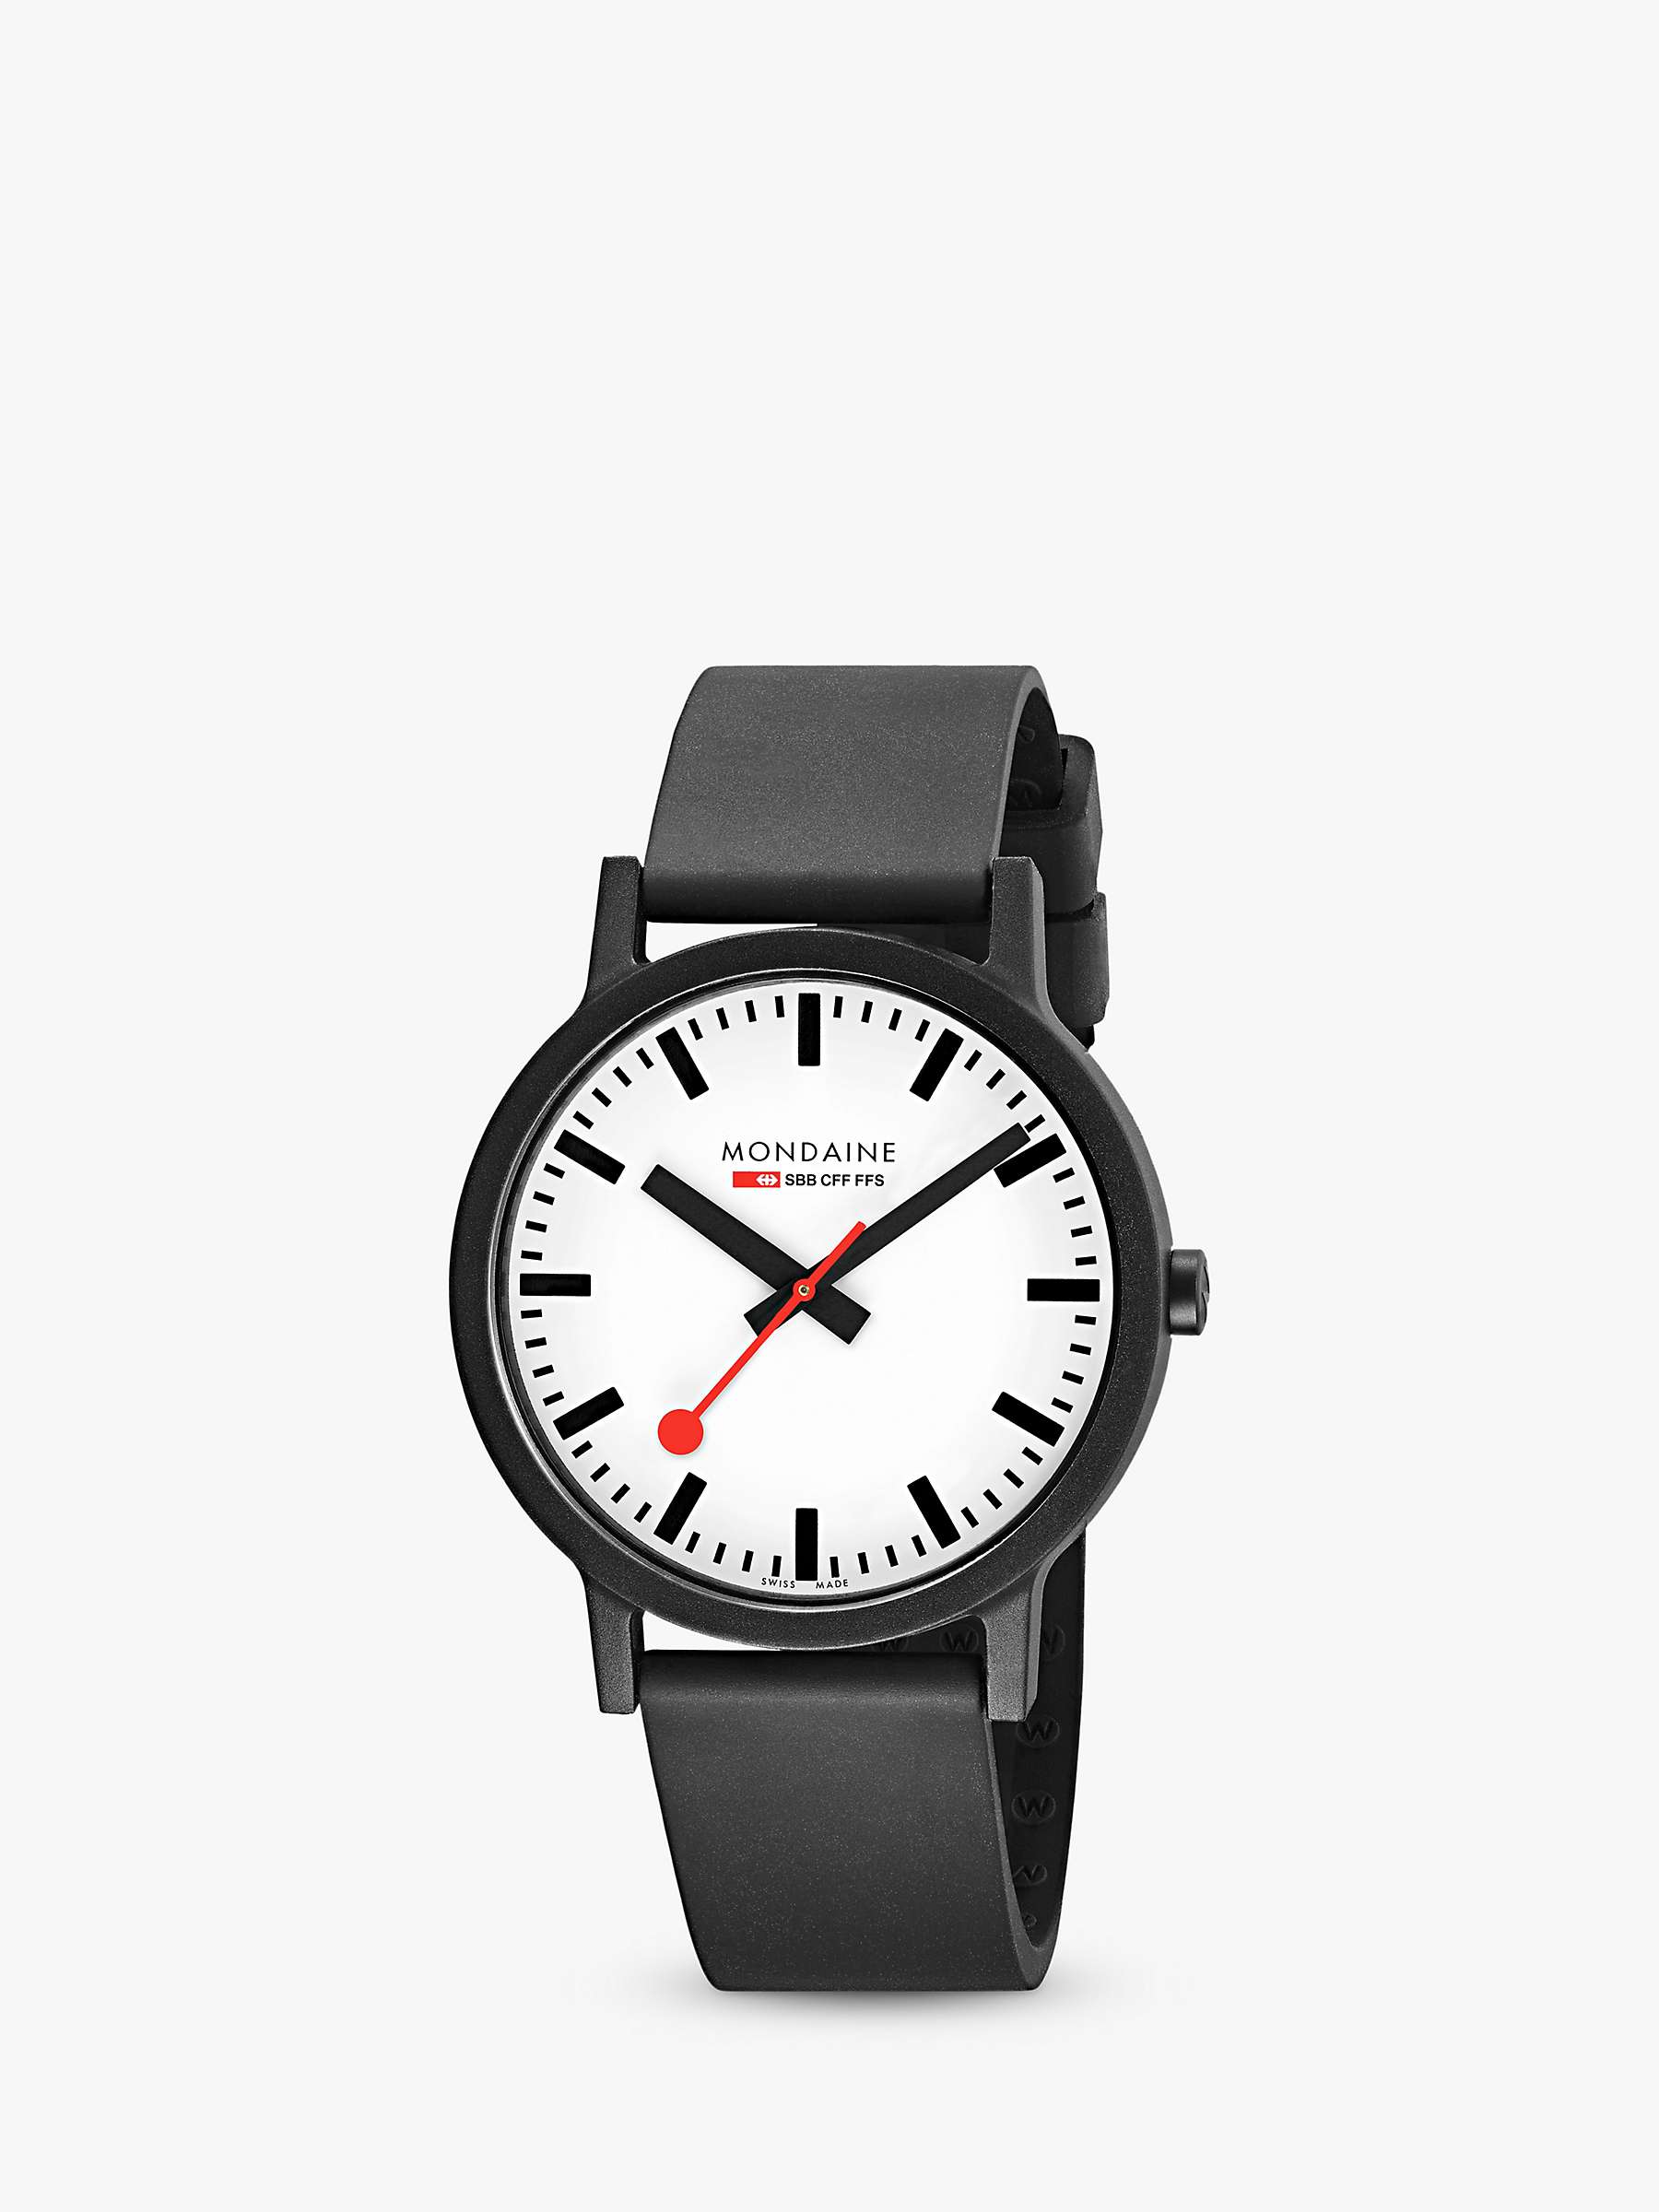 Buy Mondaine Unisex Essence Rubber Strap Watch, Black/White MS1.41110.RB Online at johnlewis.com